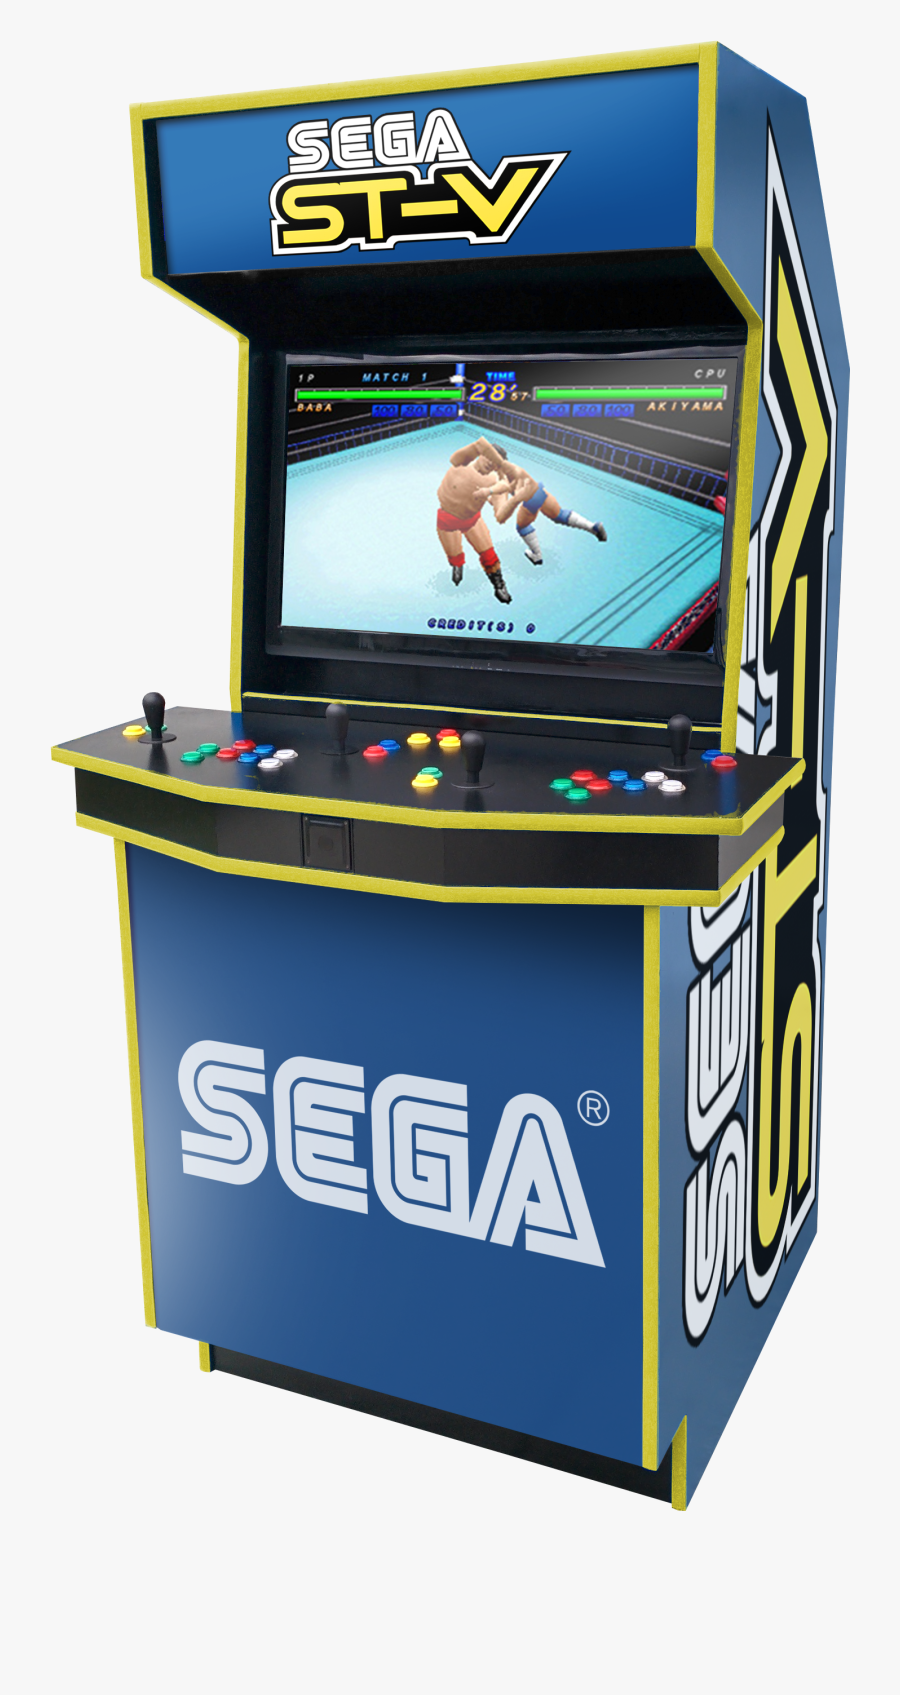 Sega St V Arcade Cabinet, Transparent Clipart